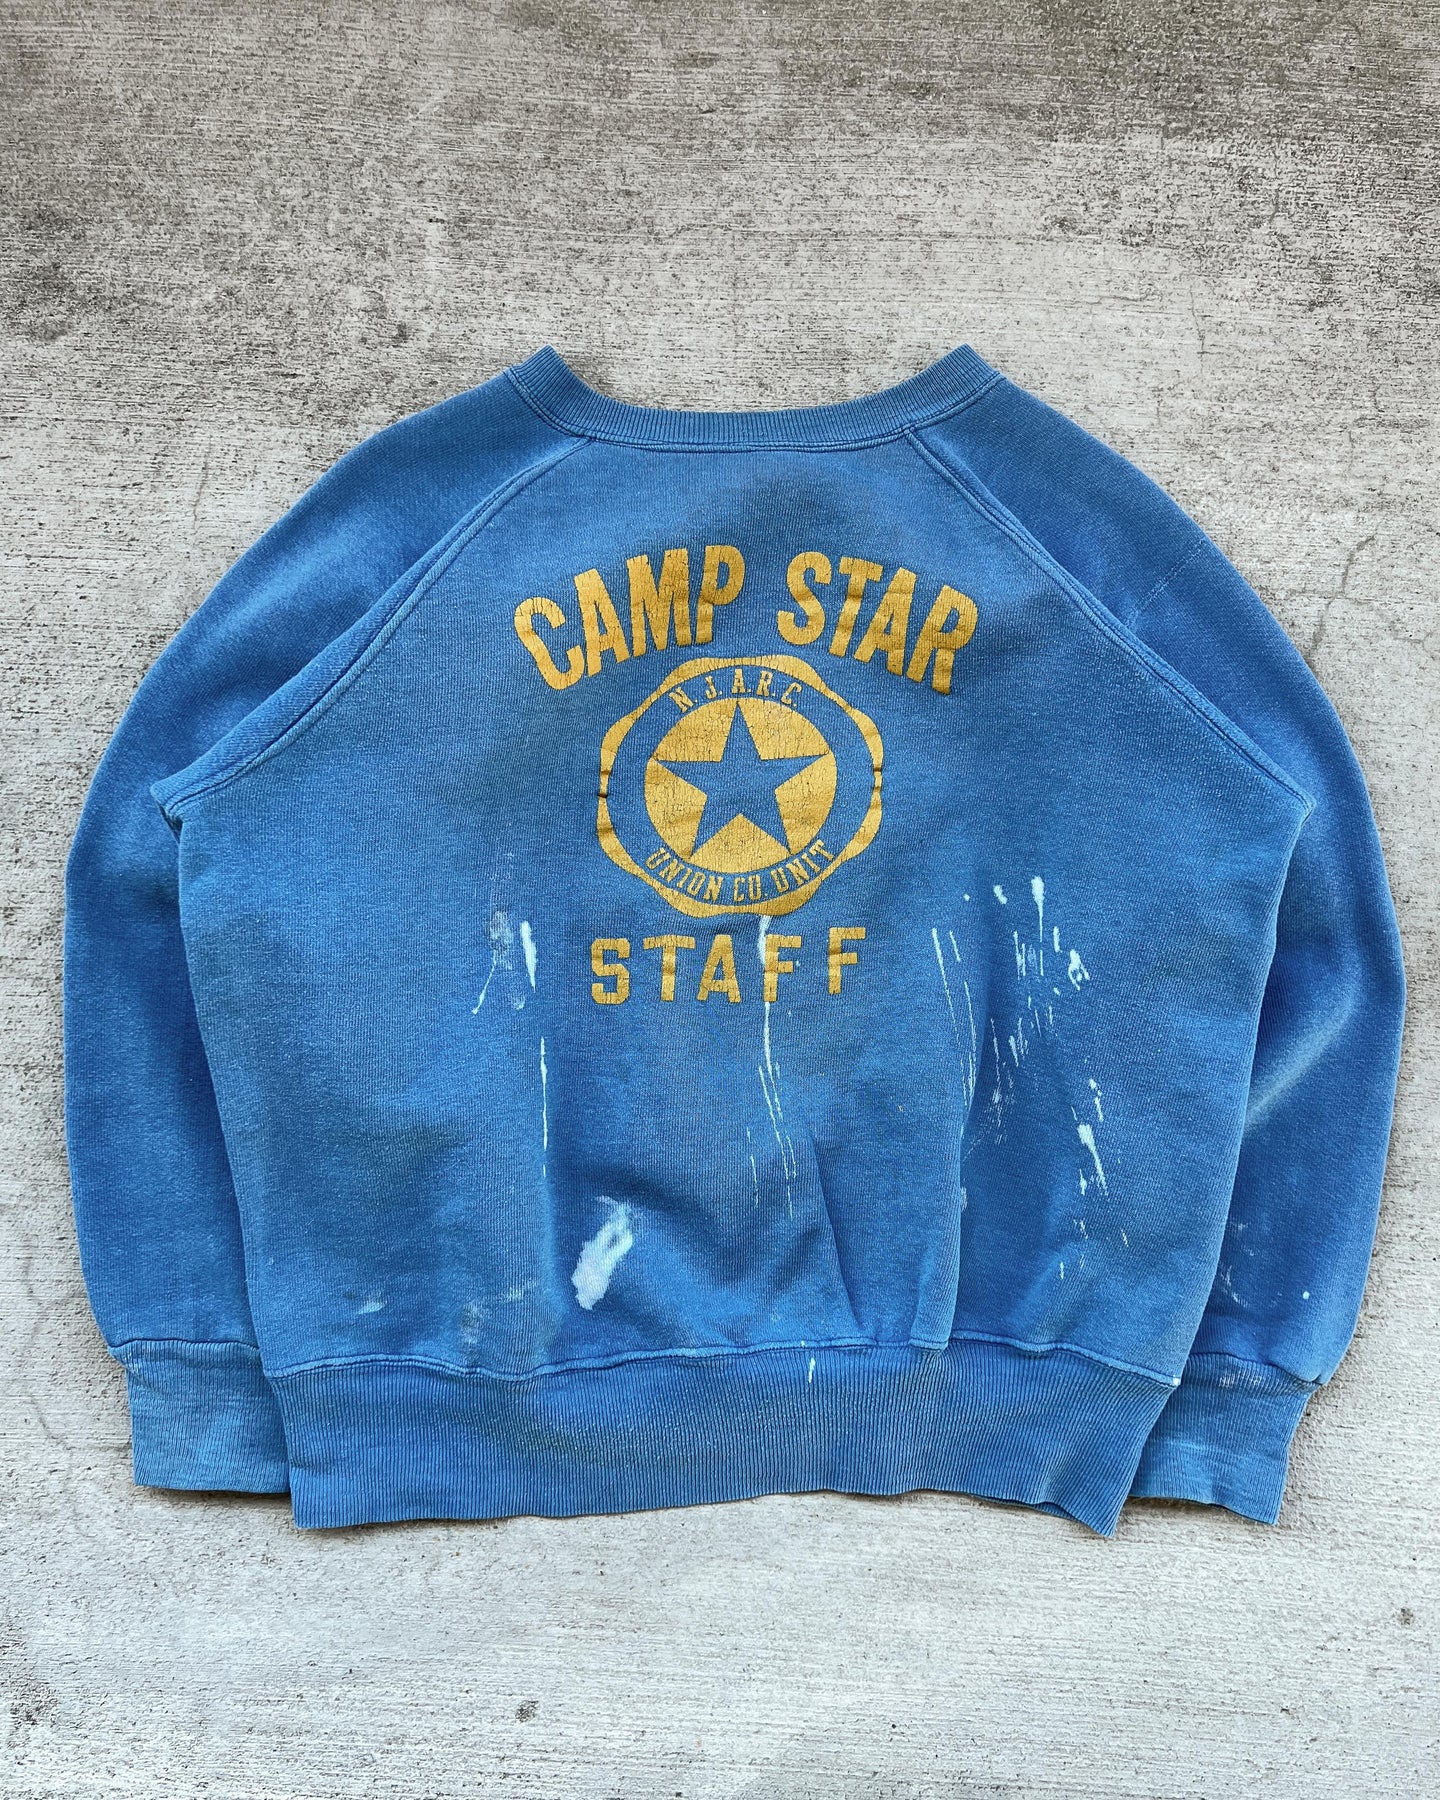 1960s Distressed Camp Star Staff Raglan Cut Crewneck - Size Large